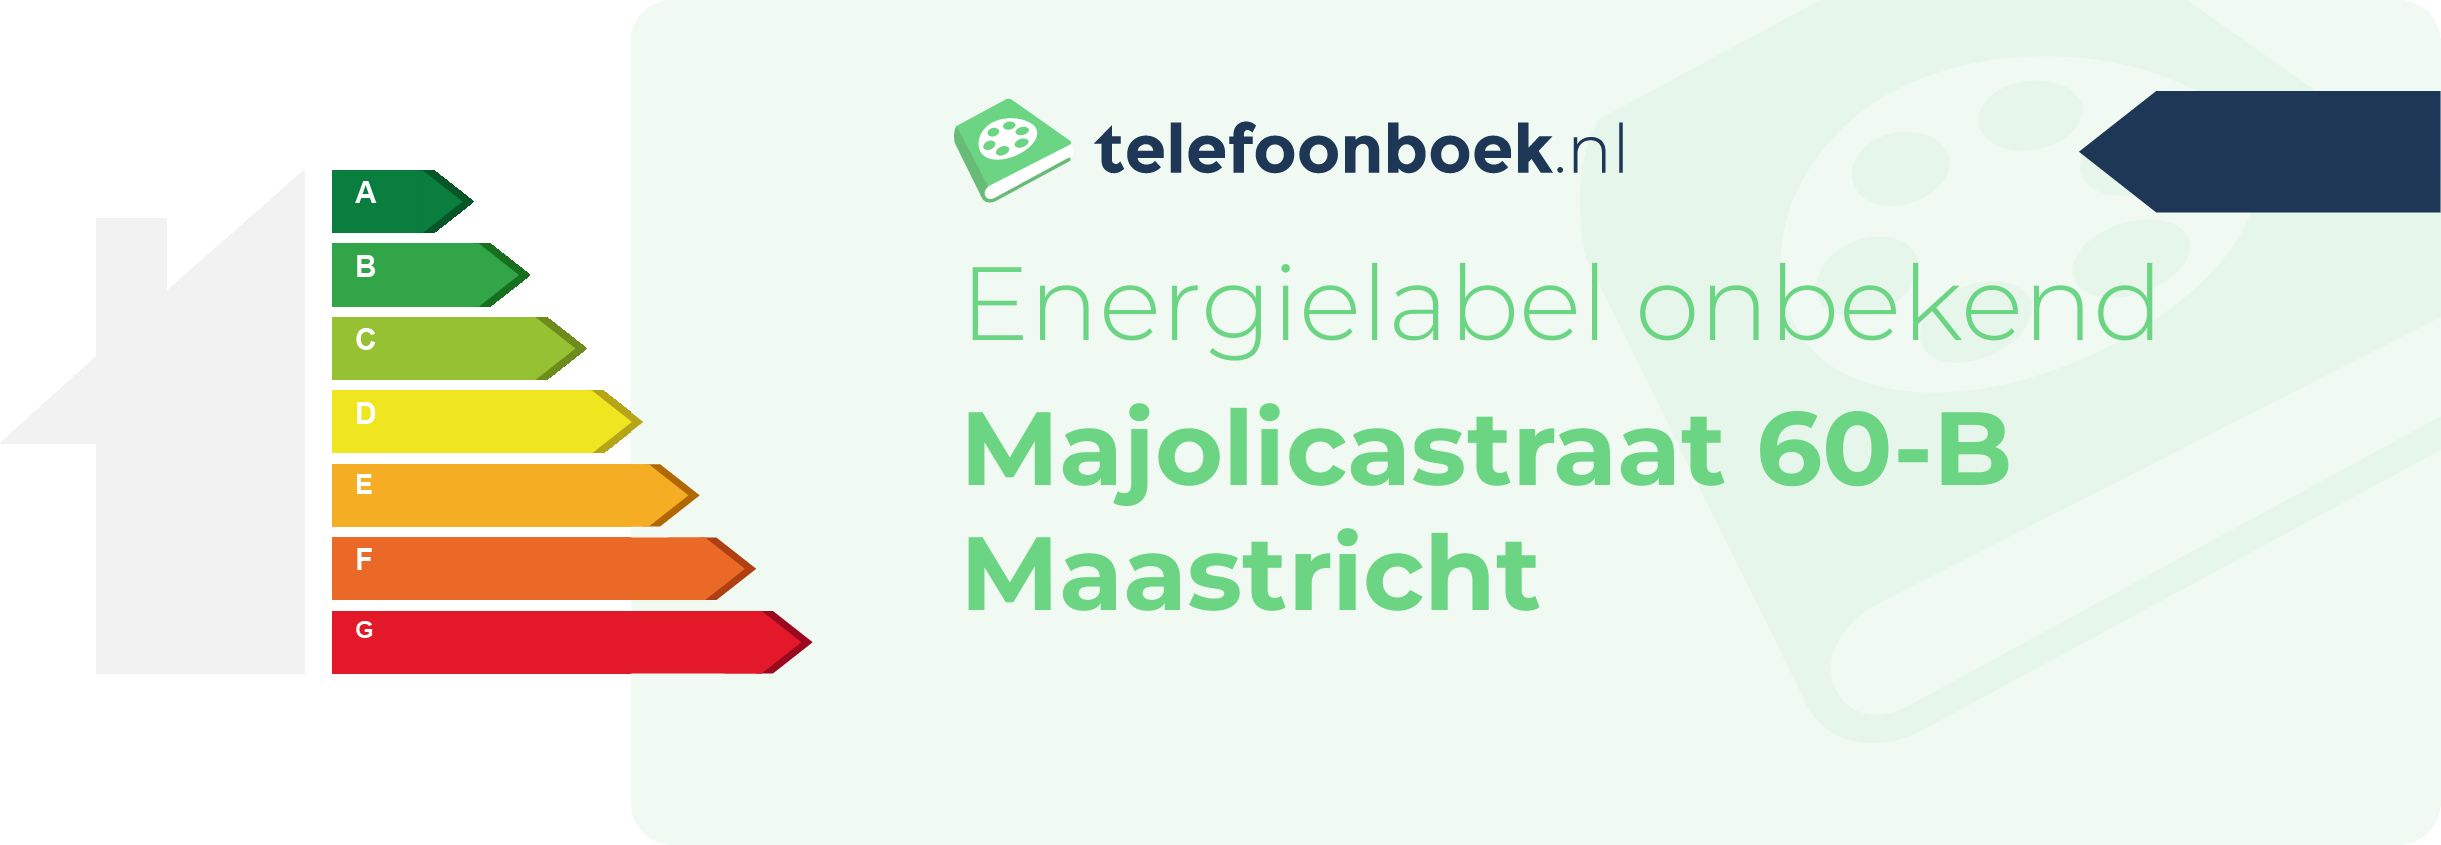 Energielabel Majolicastraat 60-B Maastricht